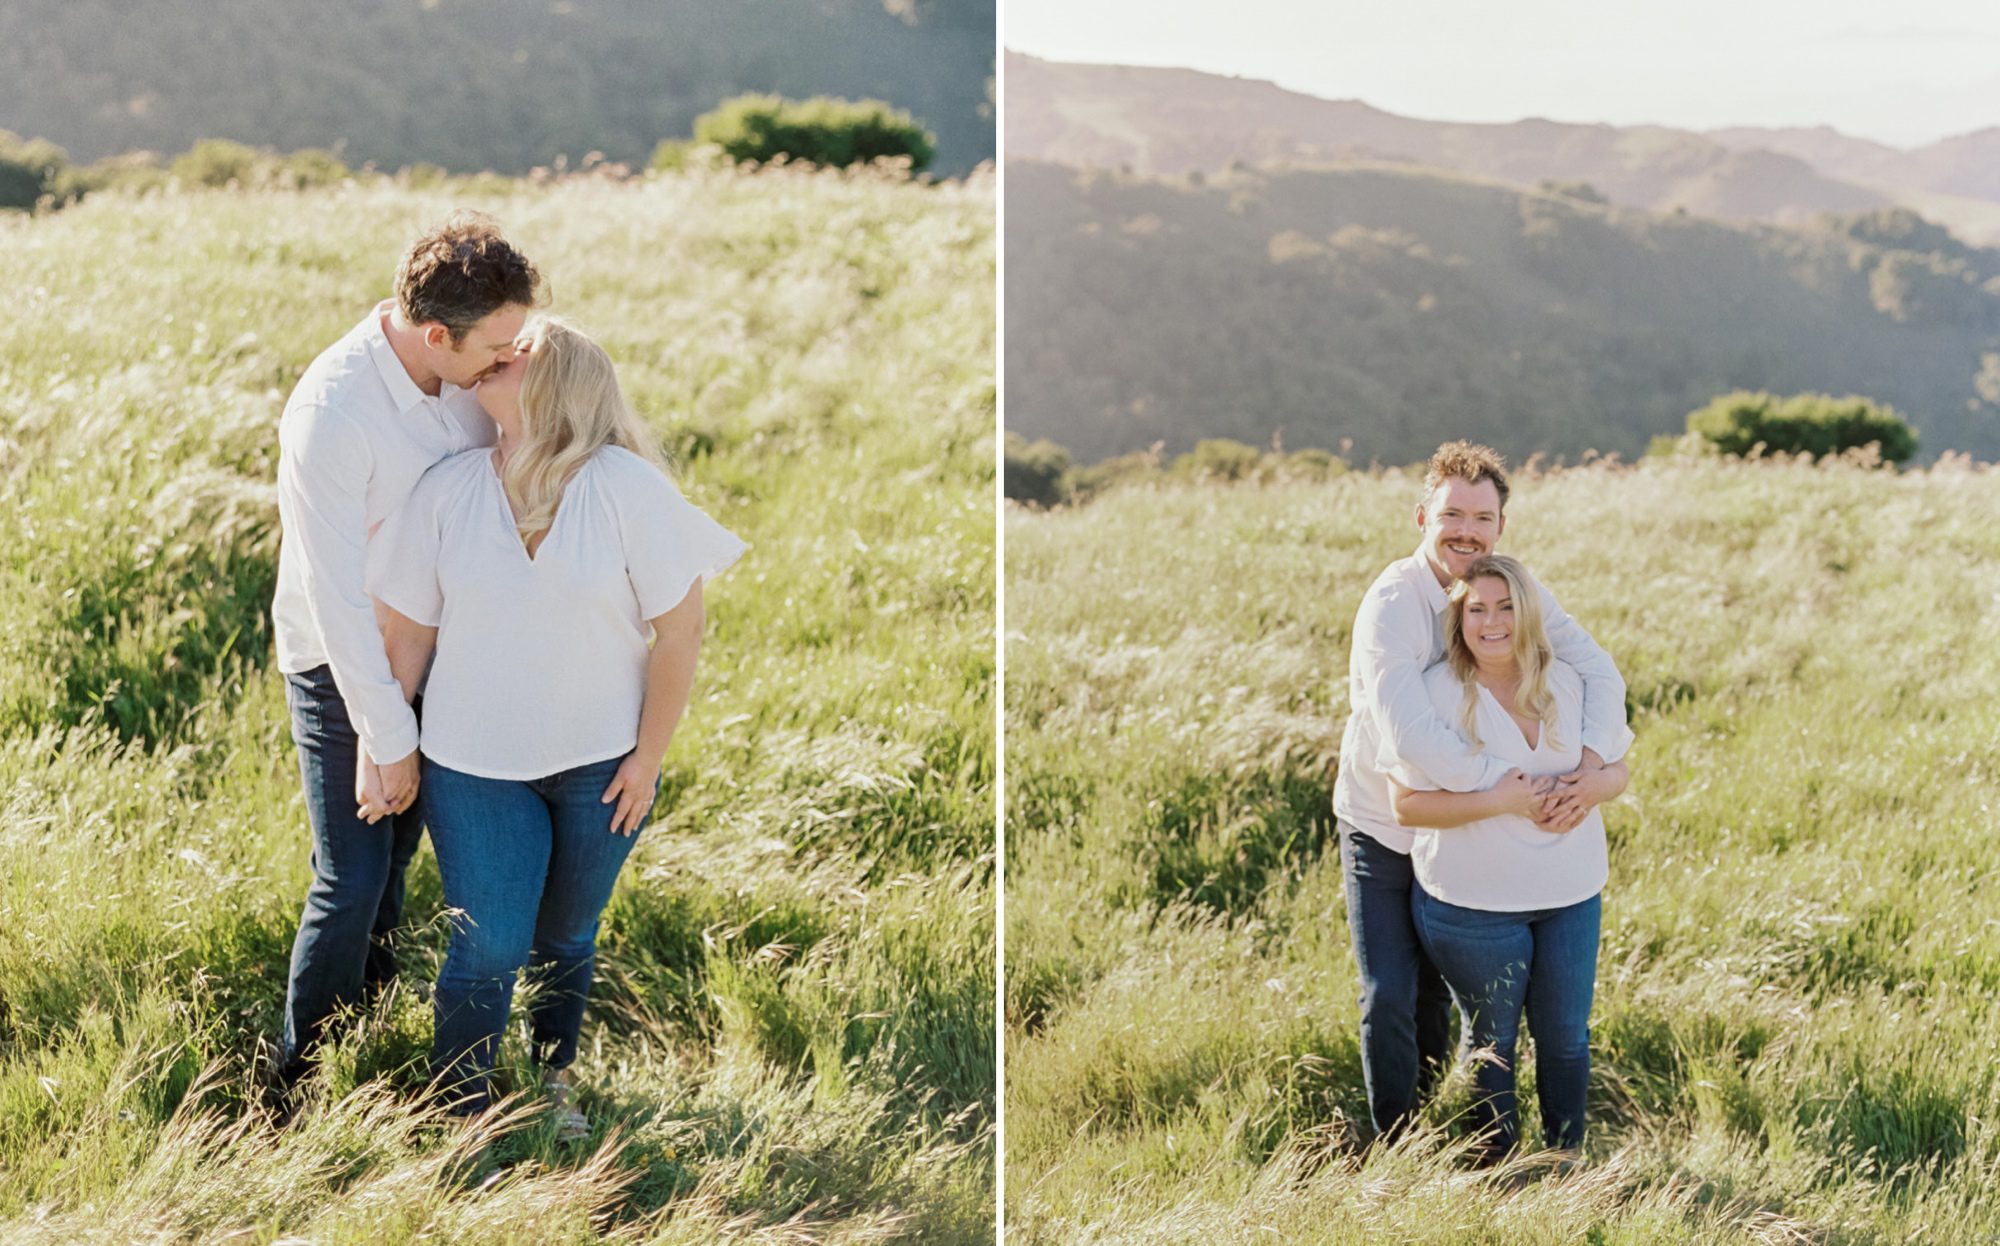 Engagement photos on Film at scenic Prefumo Canyon hills in San Luis Obispo by wedding photographer Jessica Sofranko